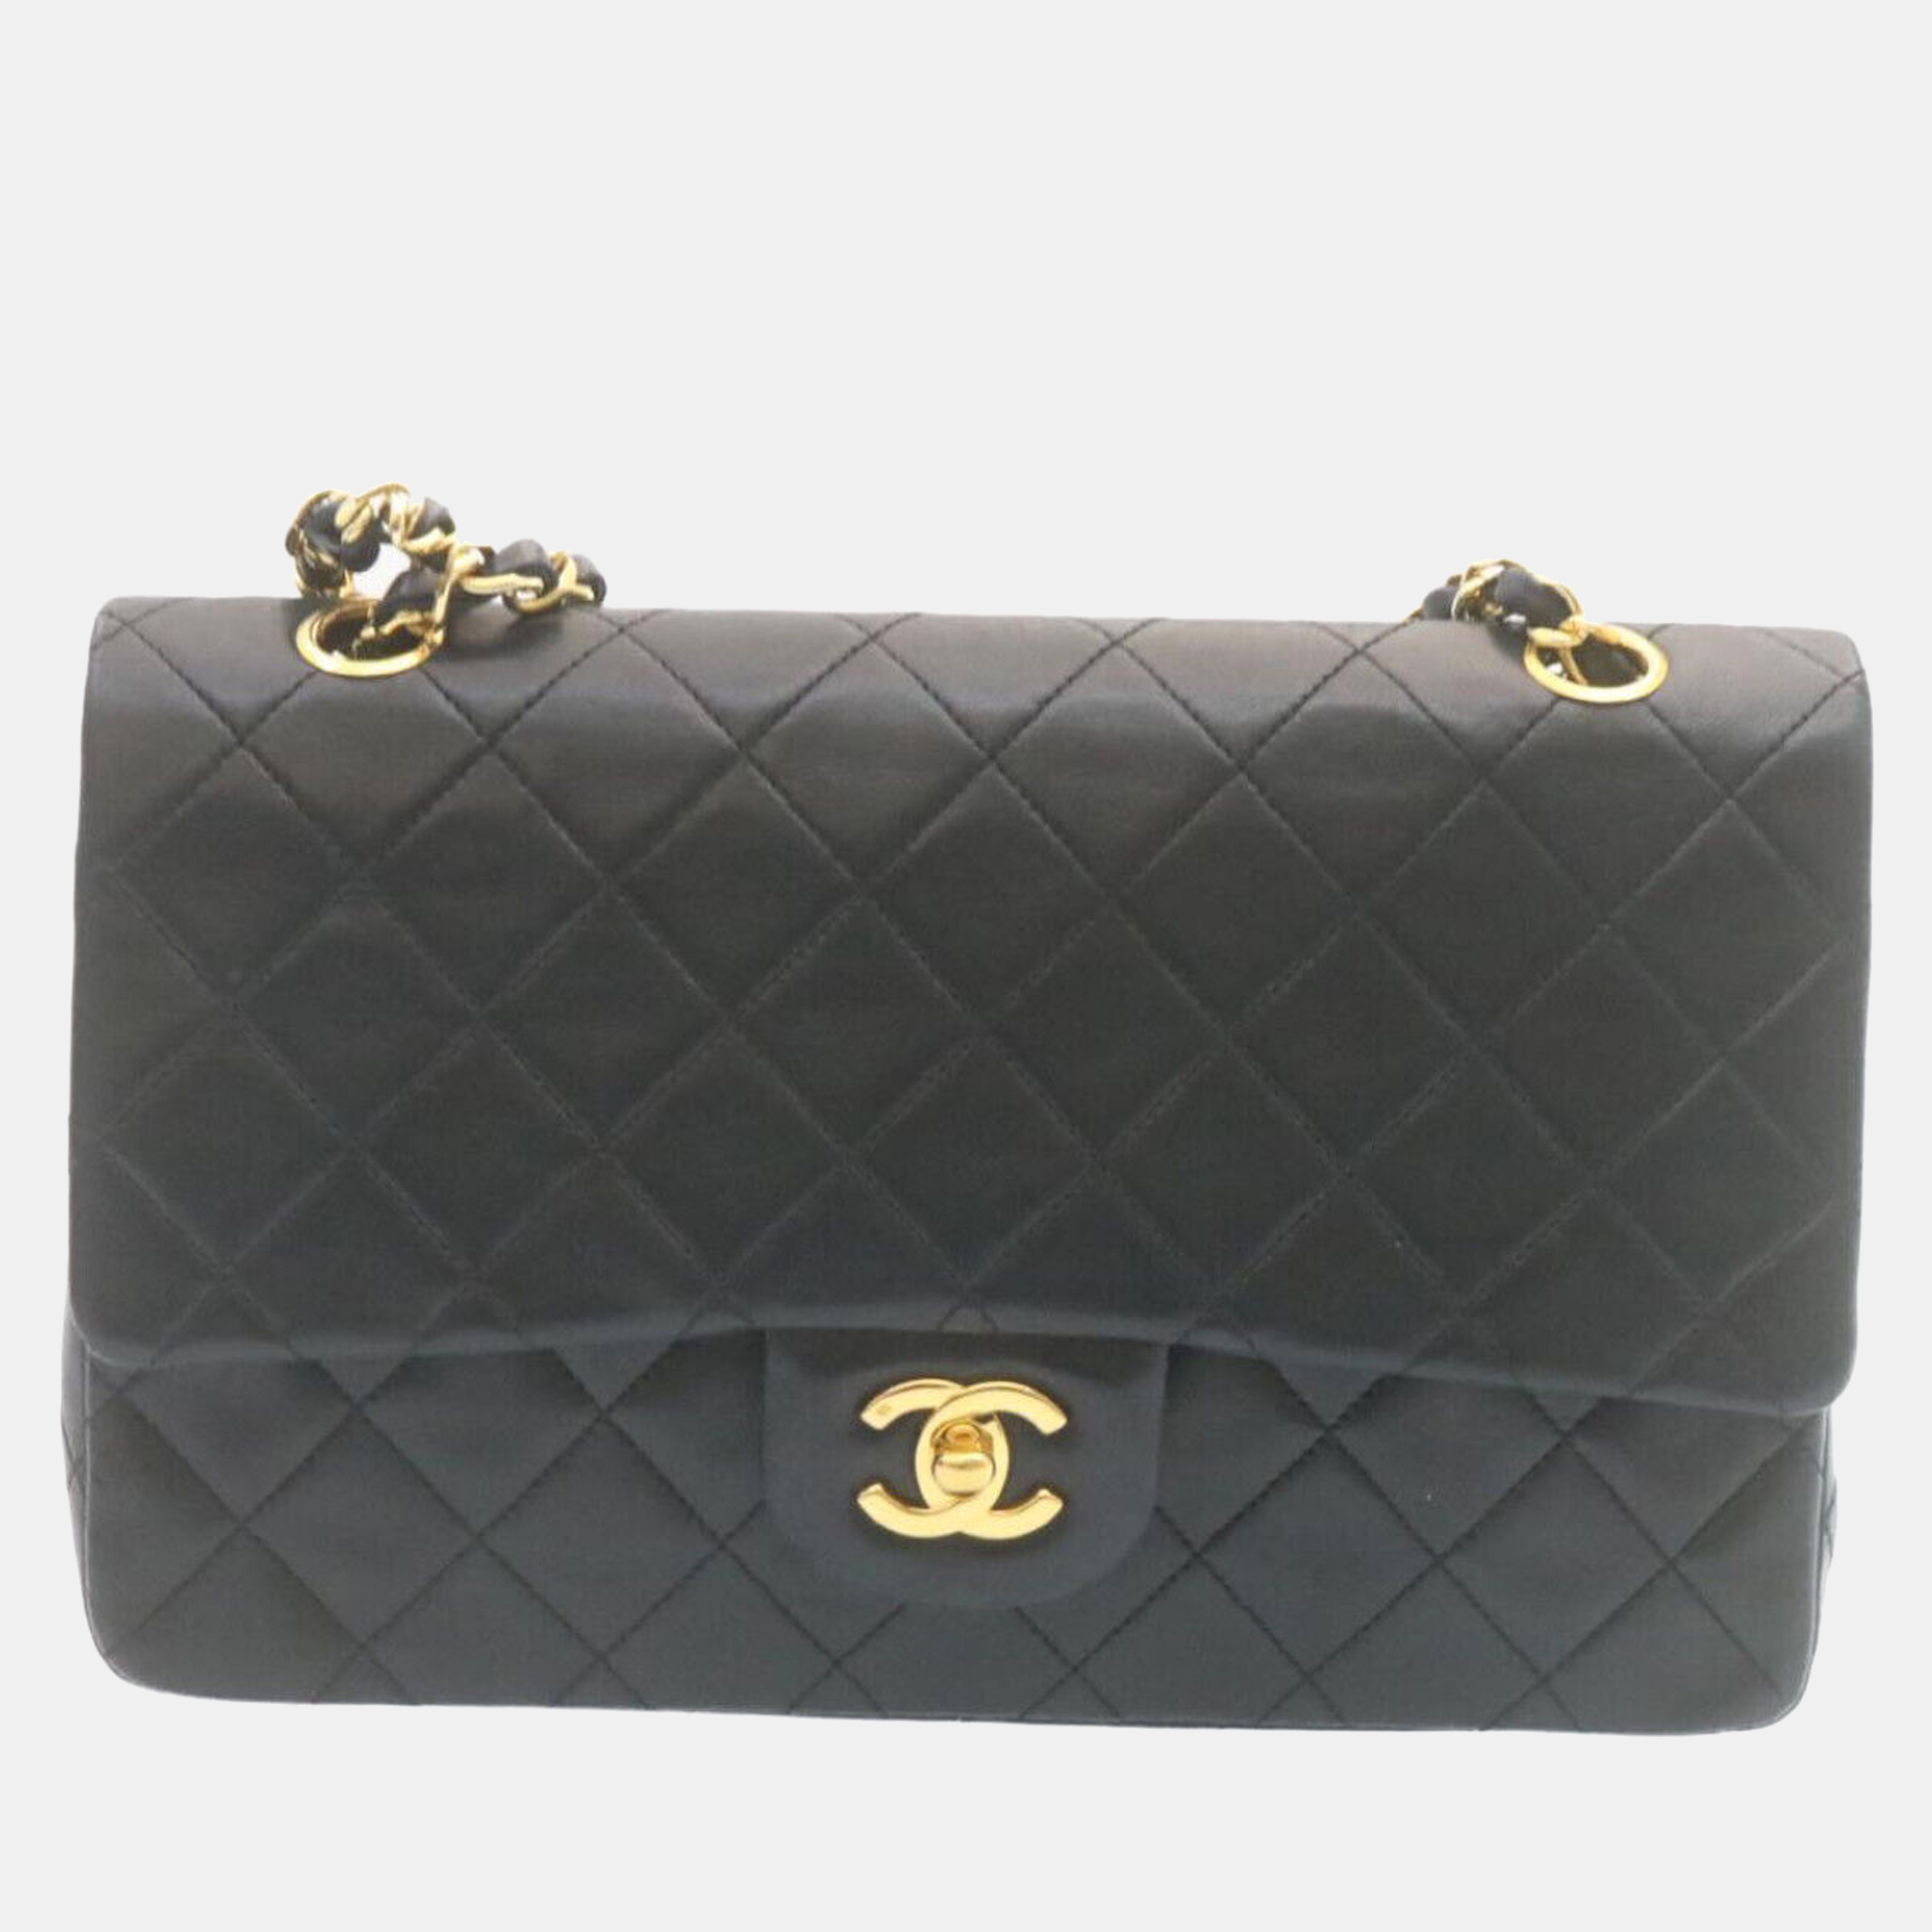 Chanel black lambskin leather medium classic double flap bag